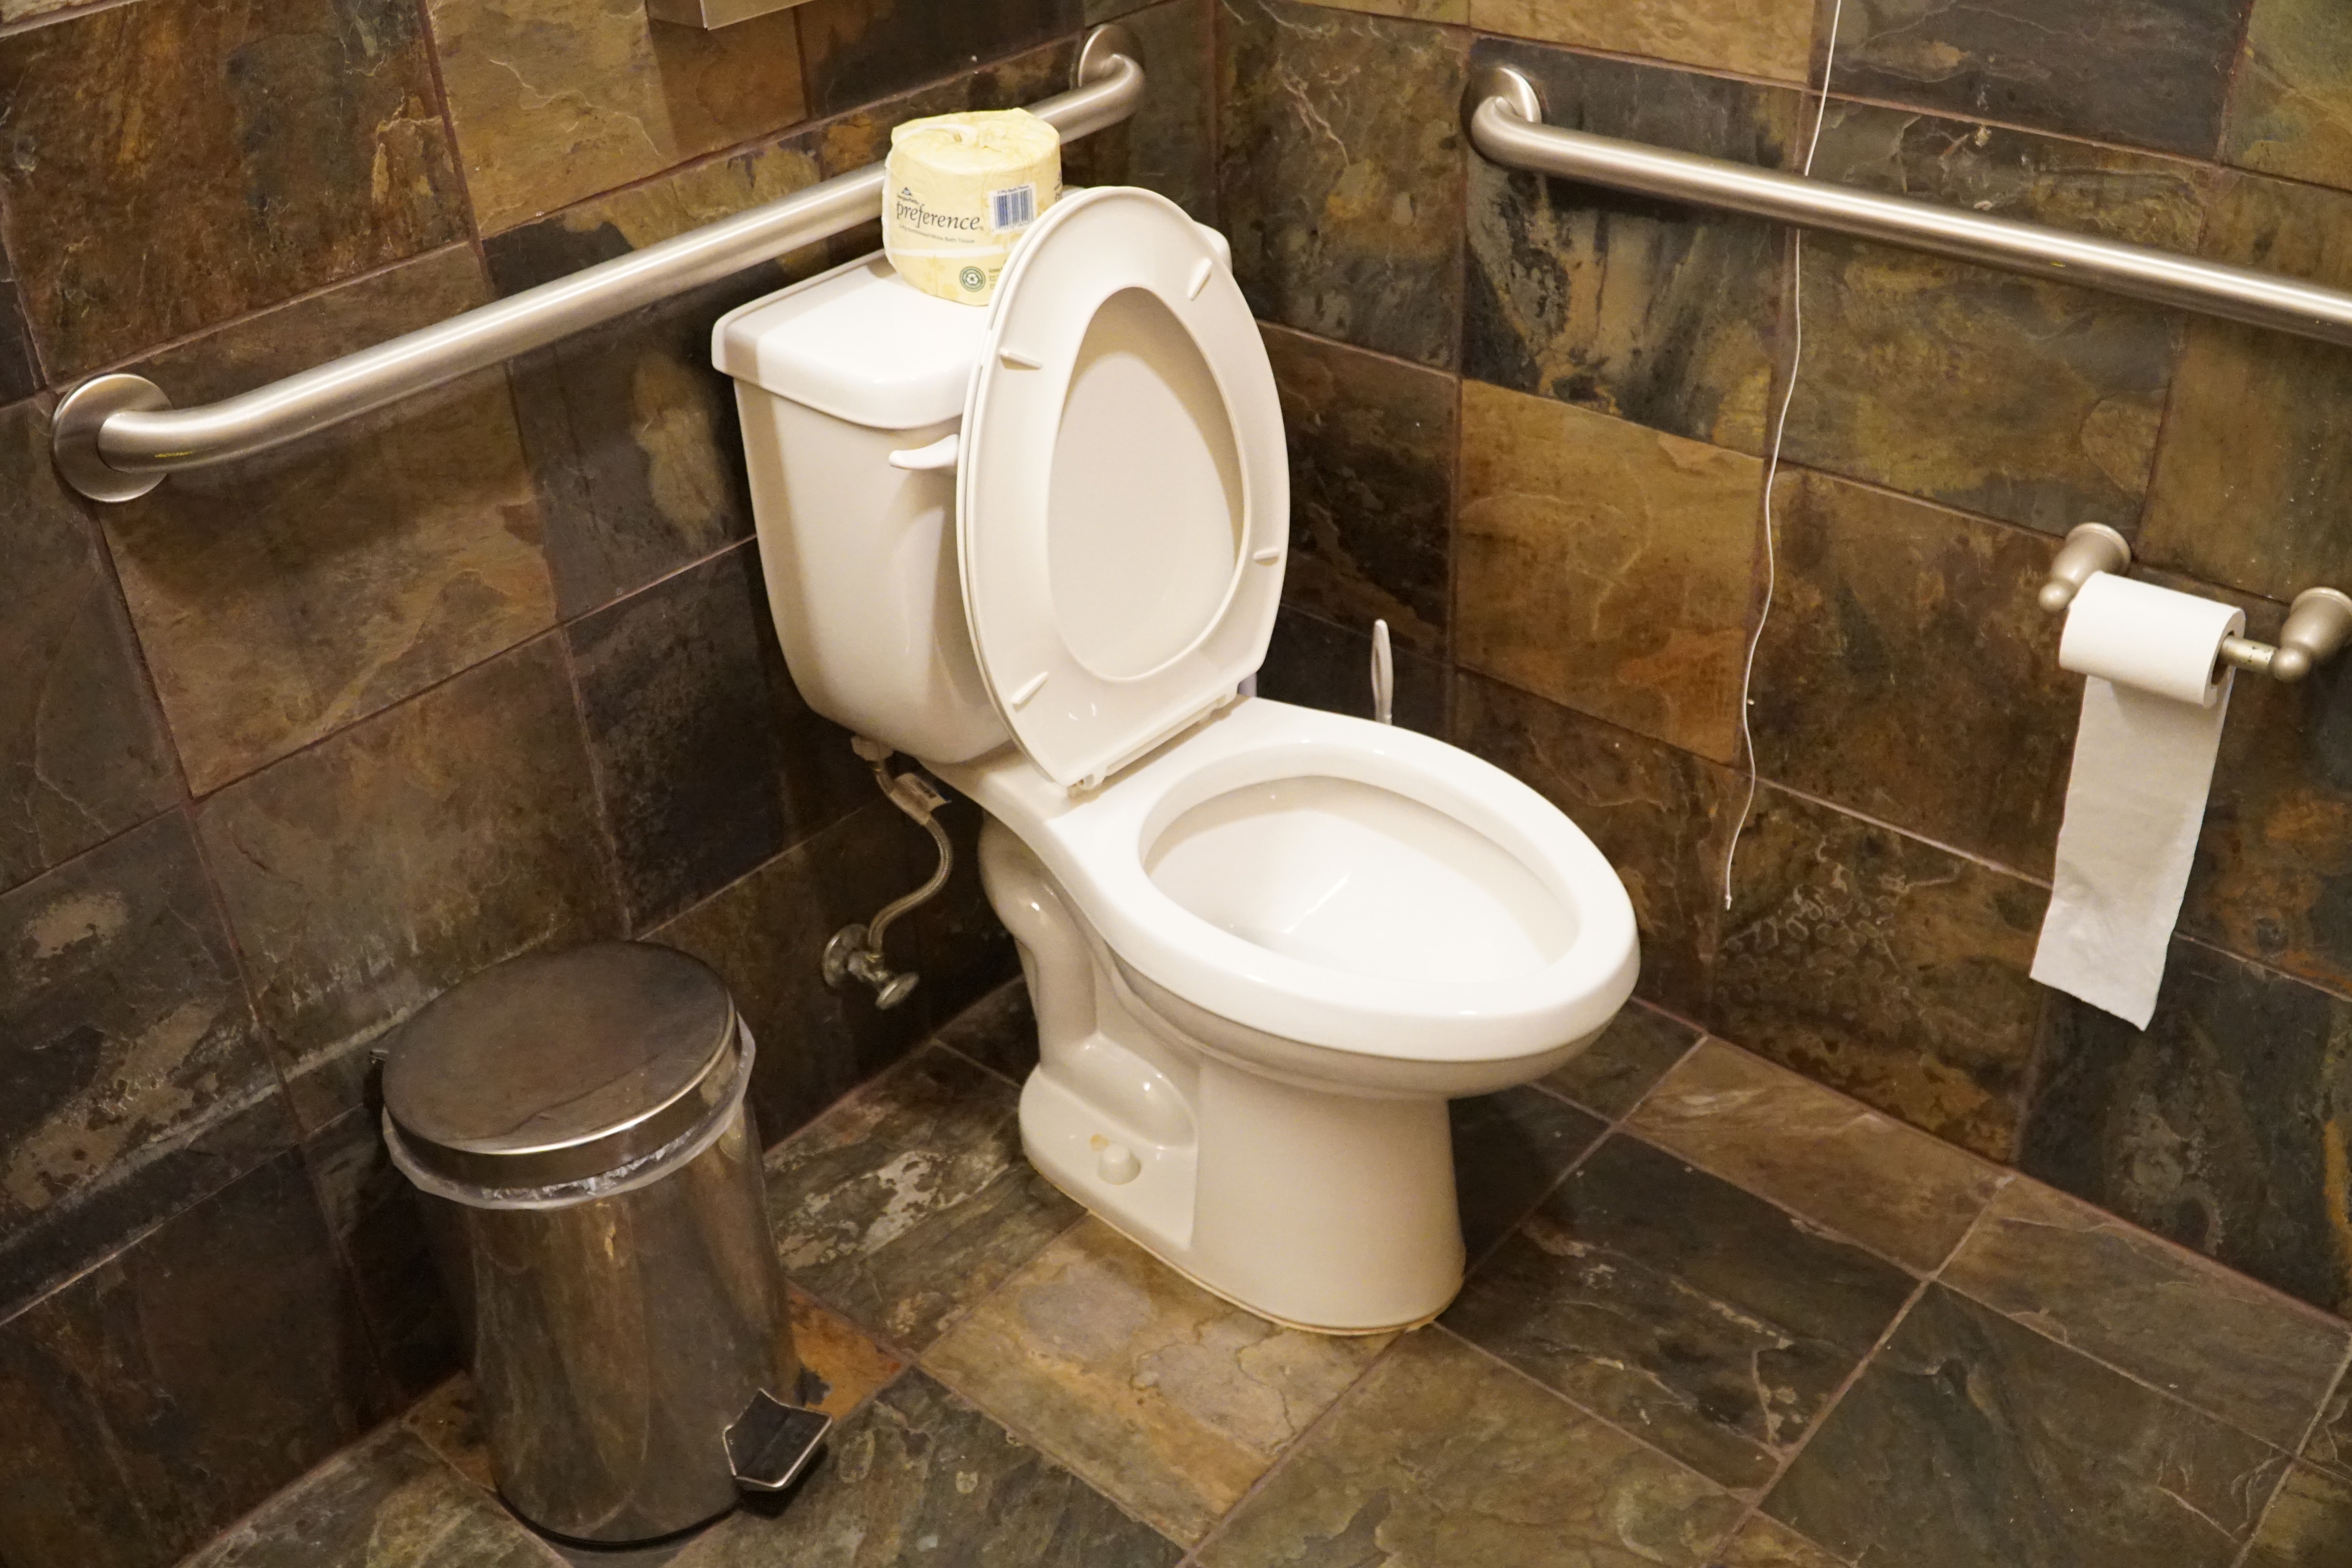 Should You Flush Dog Poop? » Urban Milwaukee